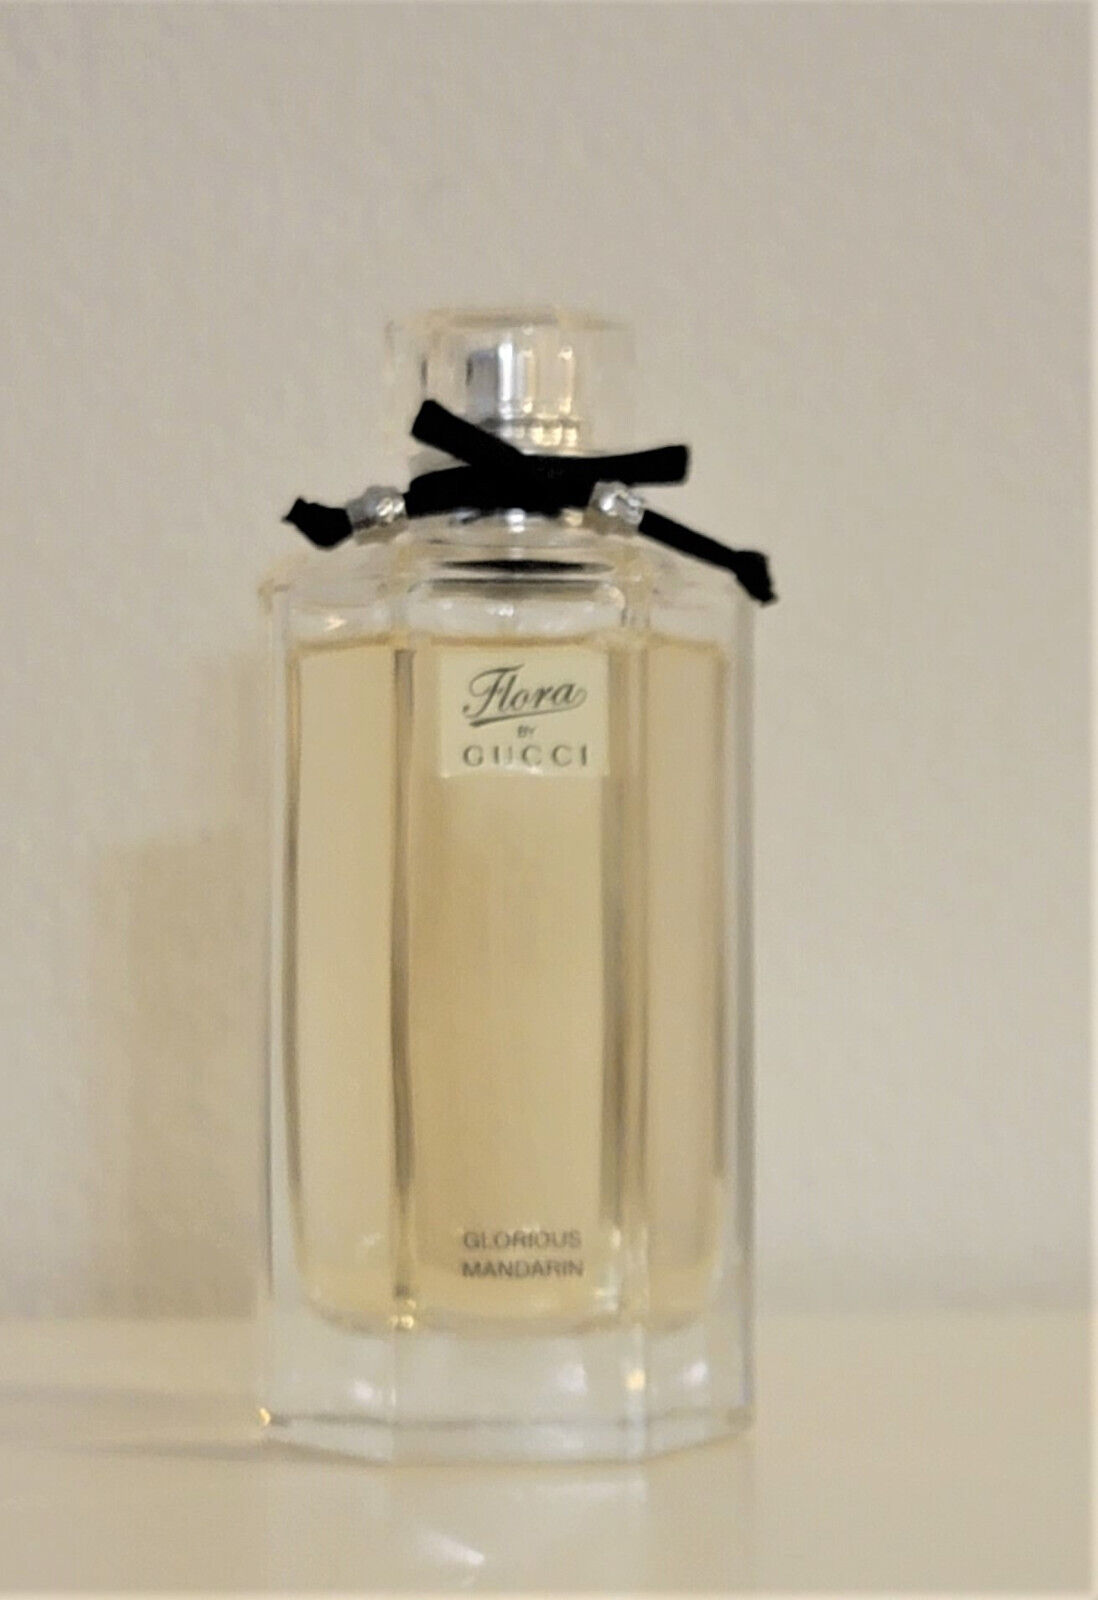 Gucci Flora Glorious Mandarin by Gucci 3.3oz / 100 ml edt spy perfume for women